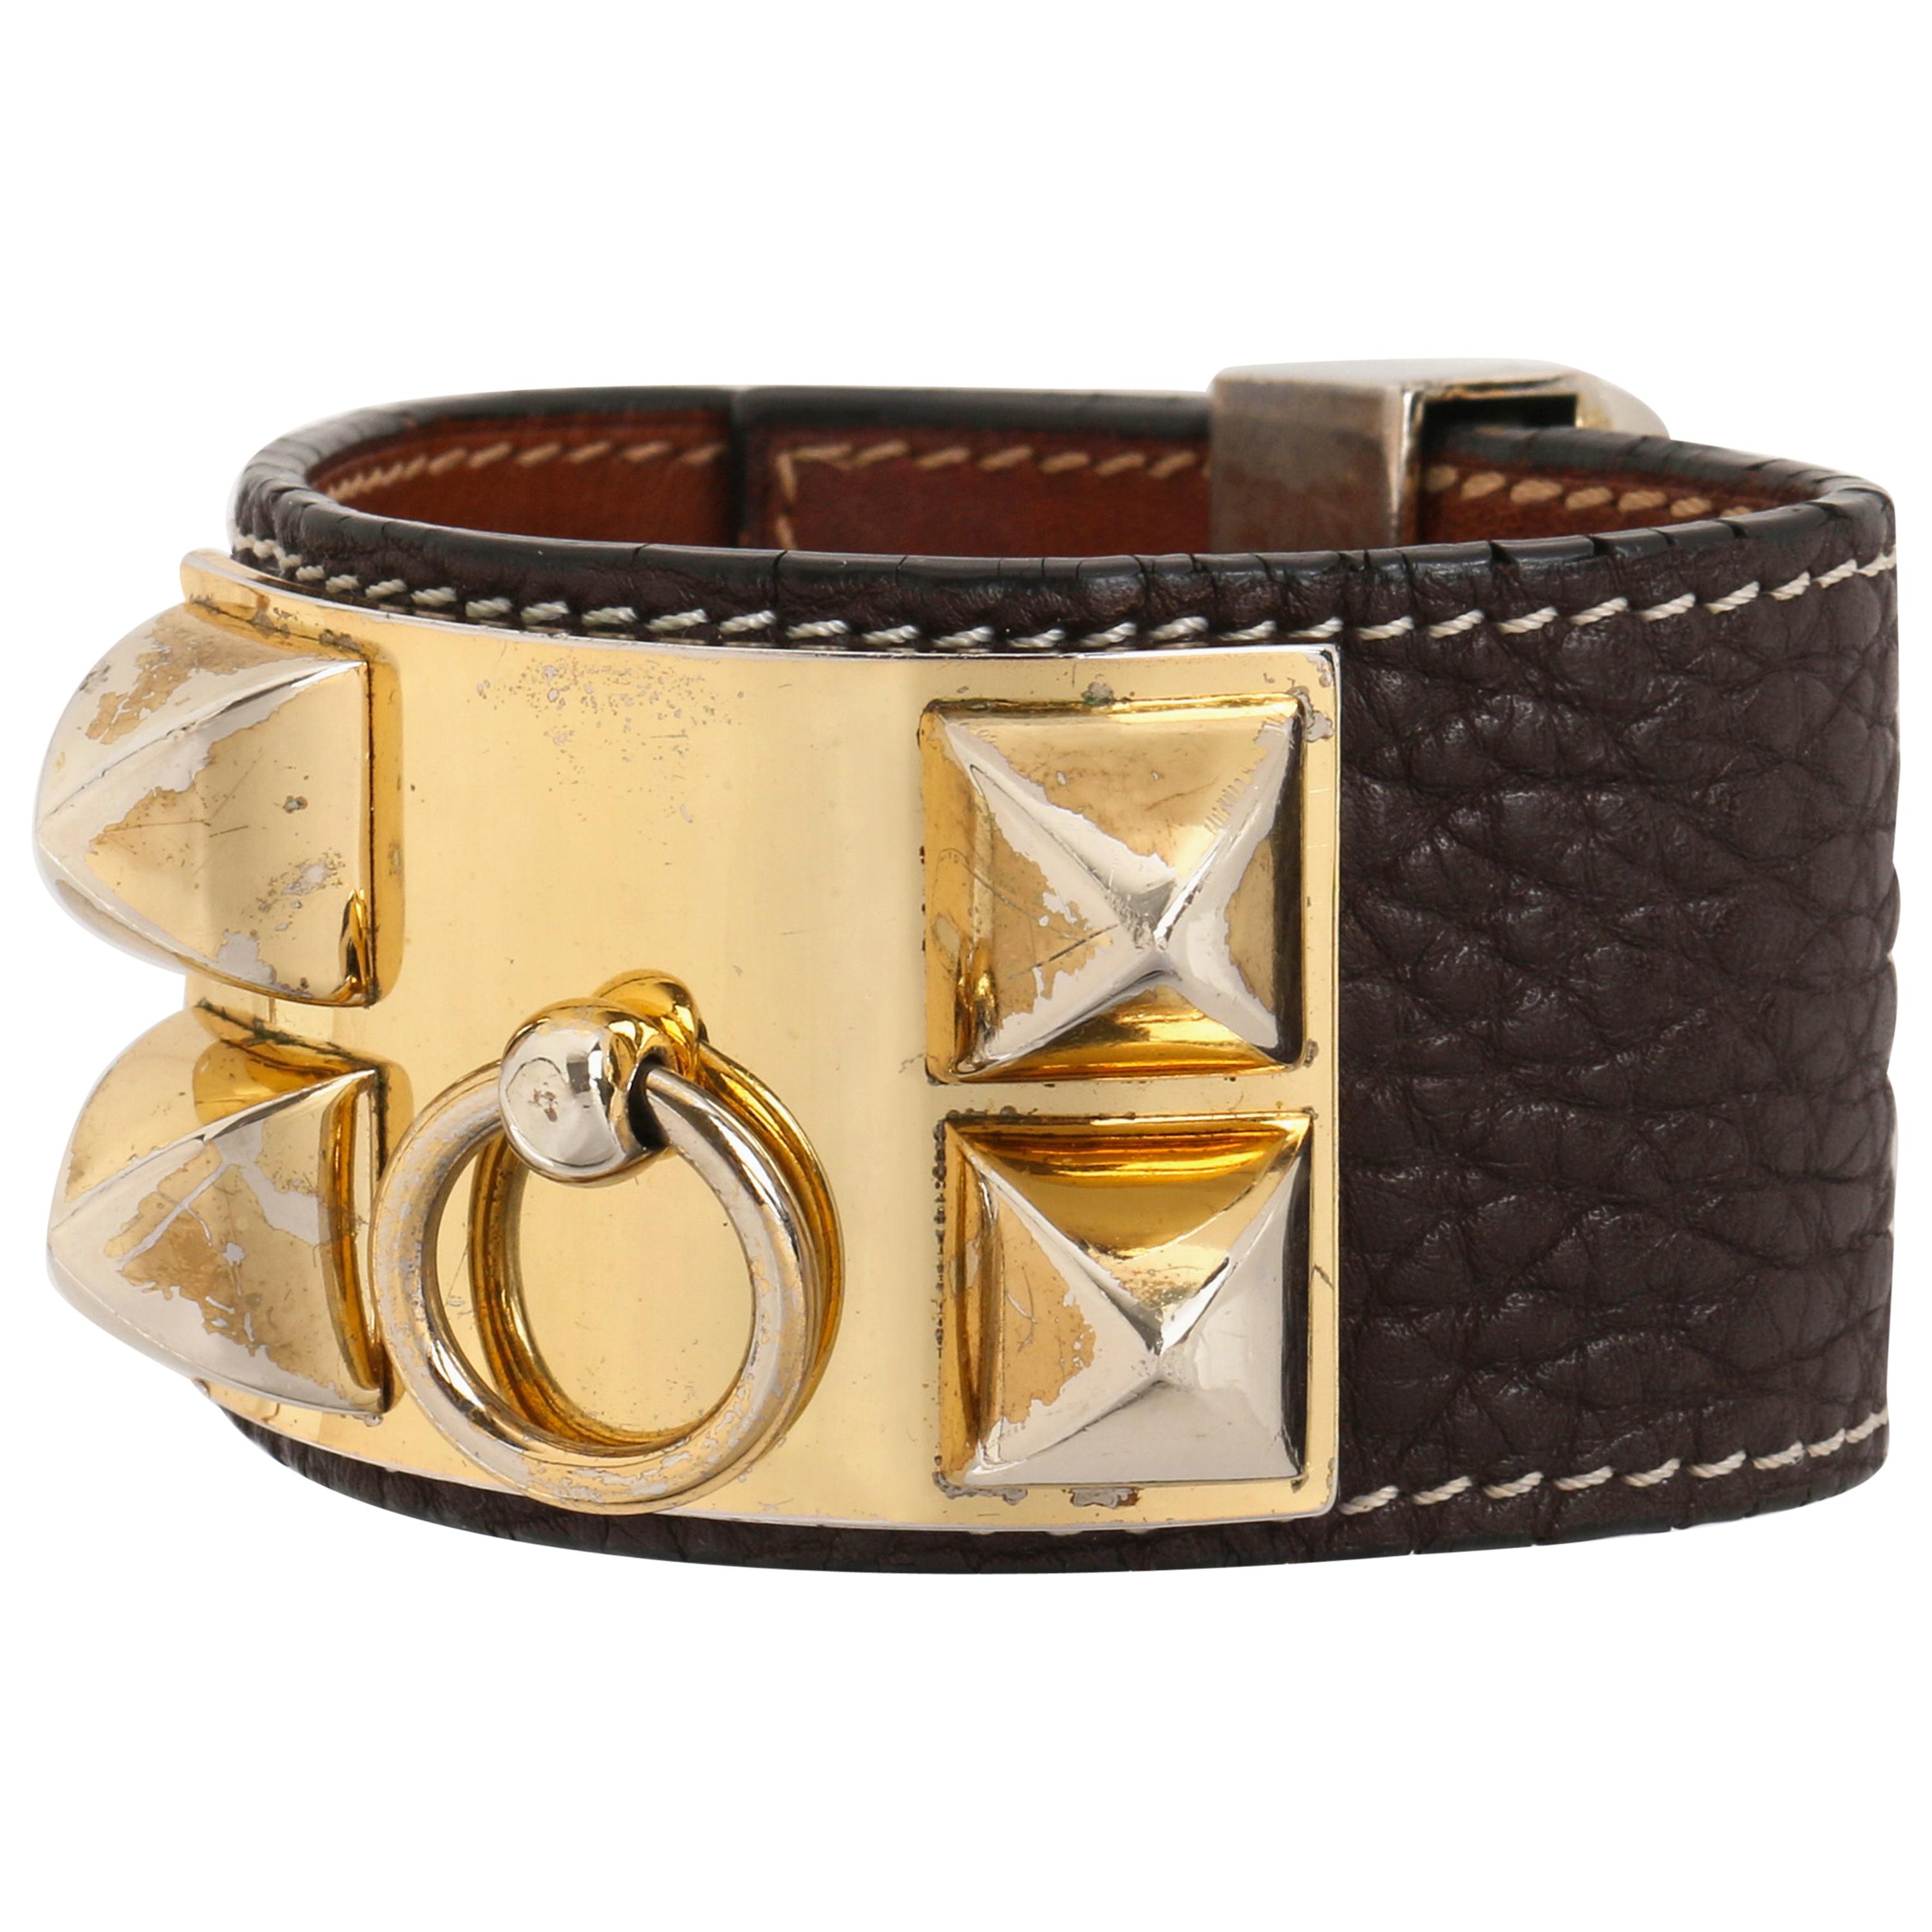 HERMES c.2006 “Collier de Chien” Dark Brown Clemence Leather Stud Cuff  Bracelet